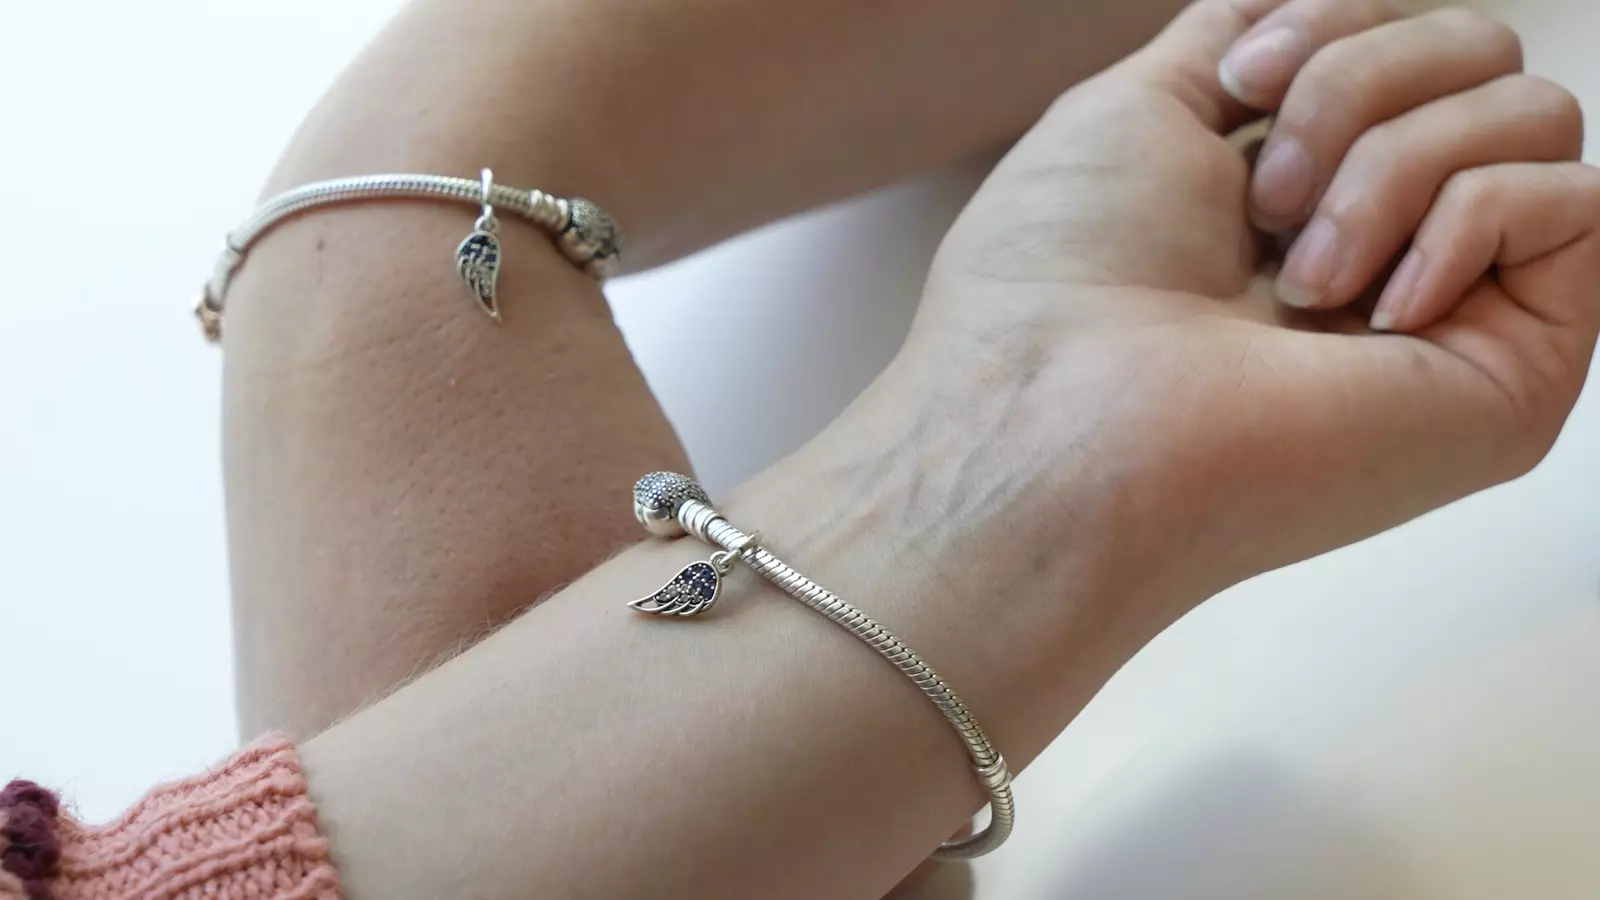 Amy and Tiffany's matching charm bracelets